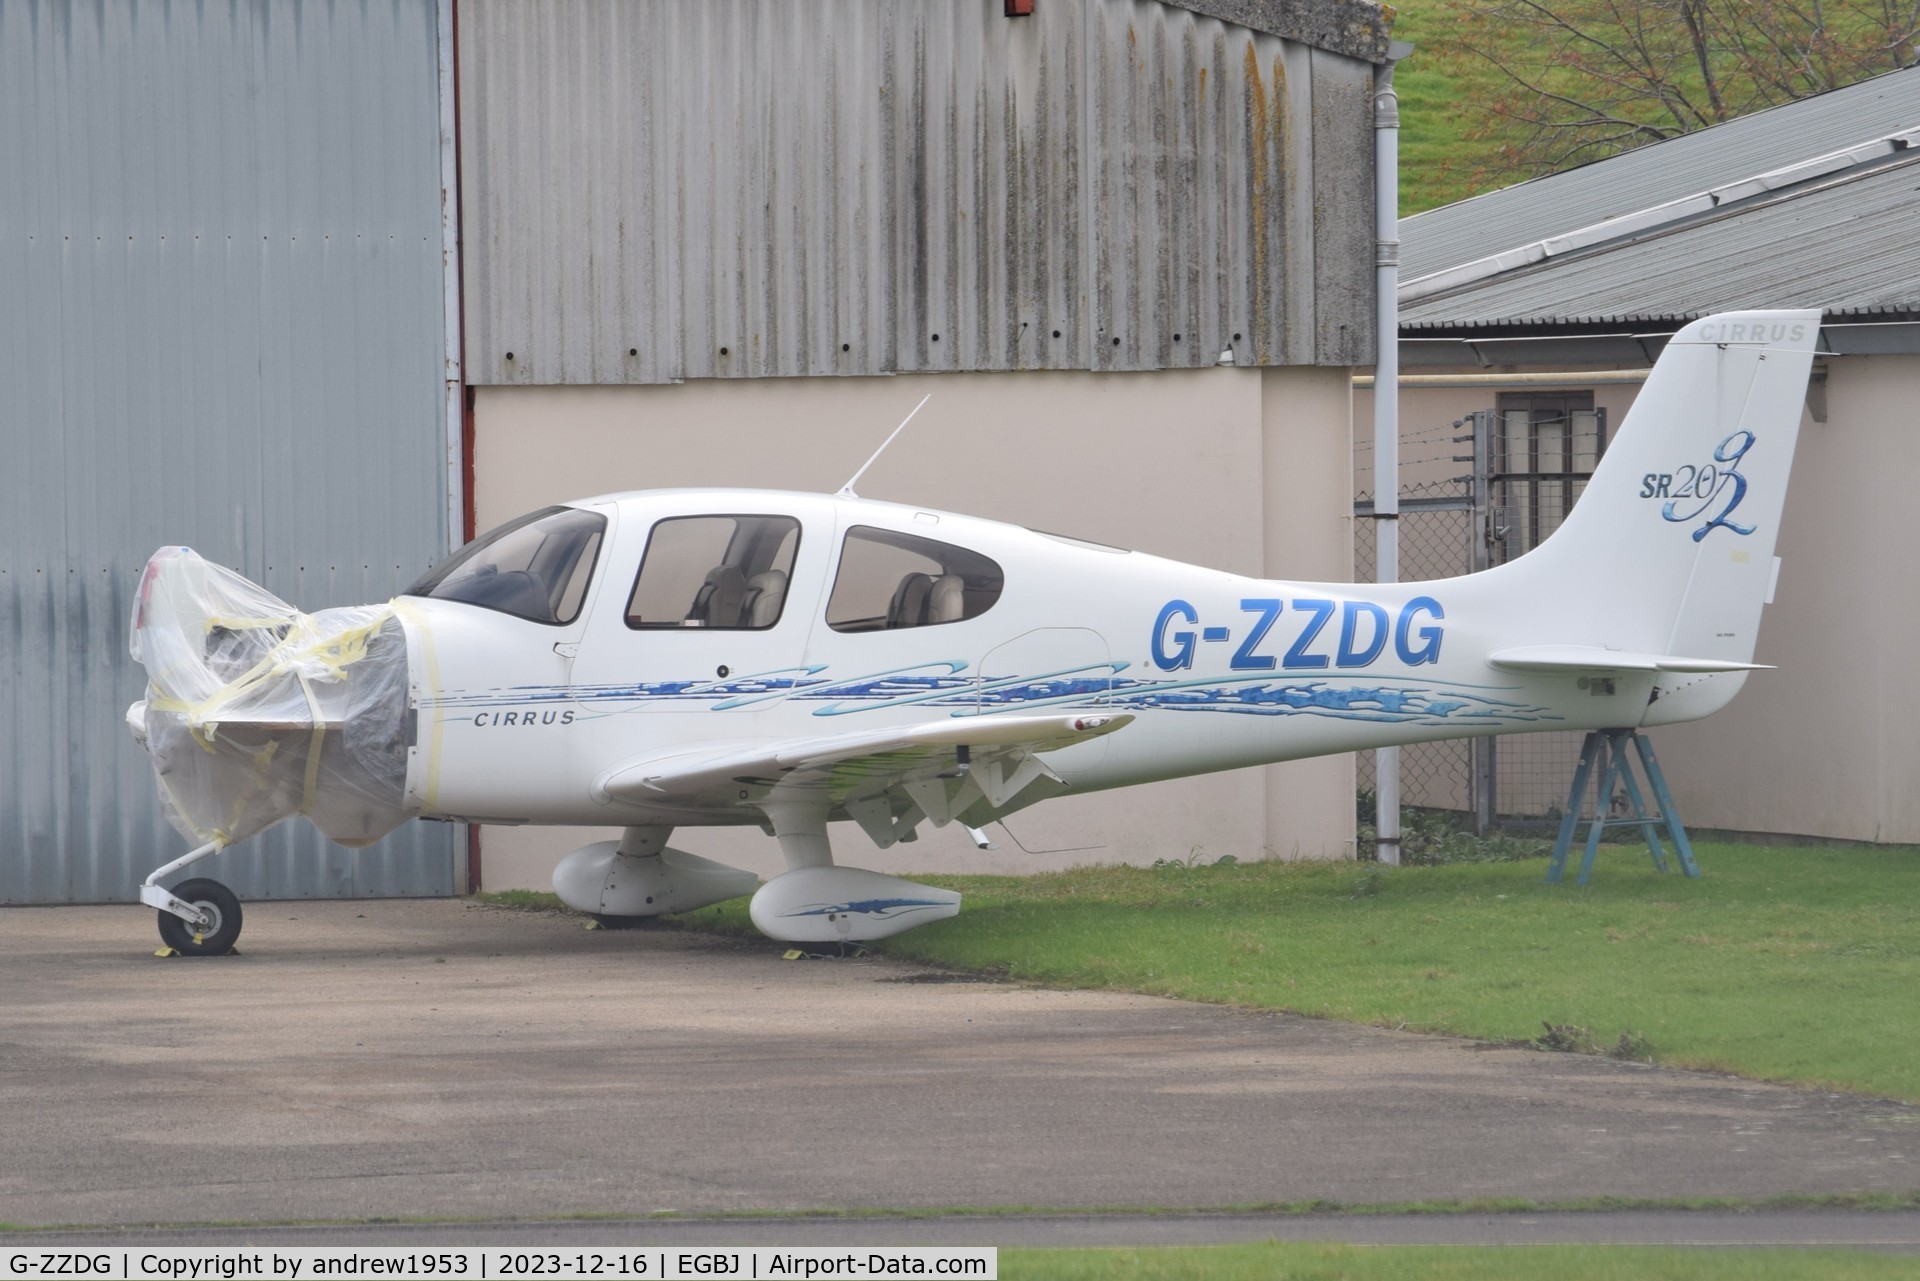 G-ZZDG, 2006 Cirrus SR20 G2 C/N 1733, G-ZZDG at Gloucestershire Airport.